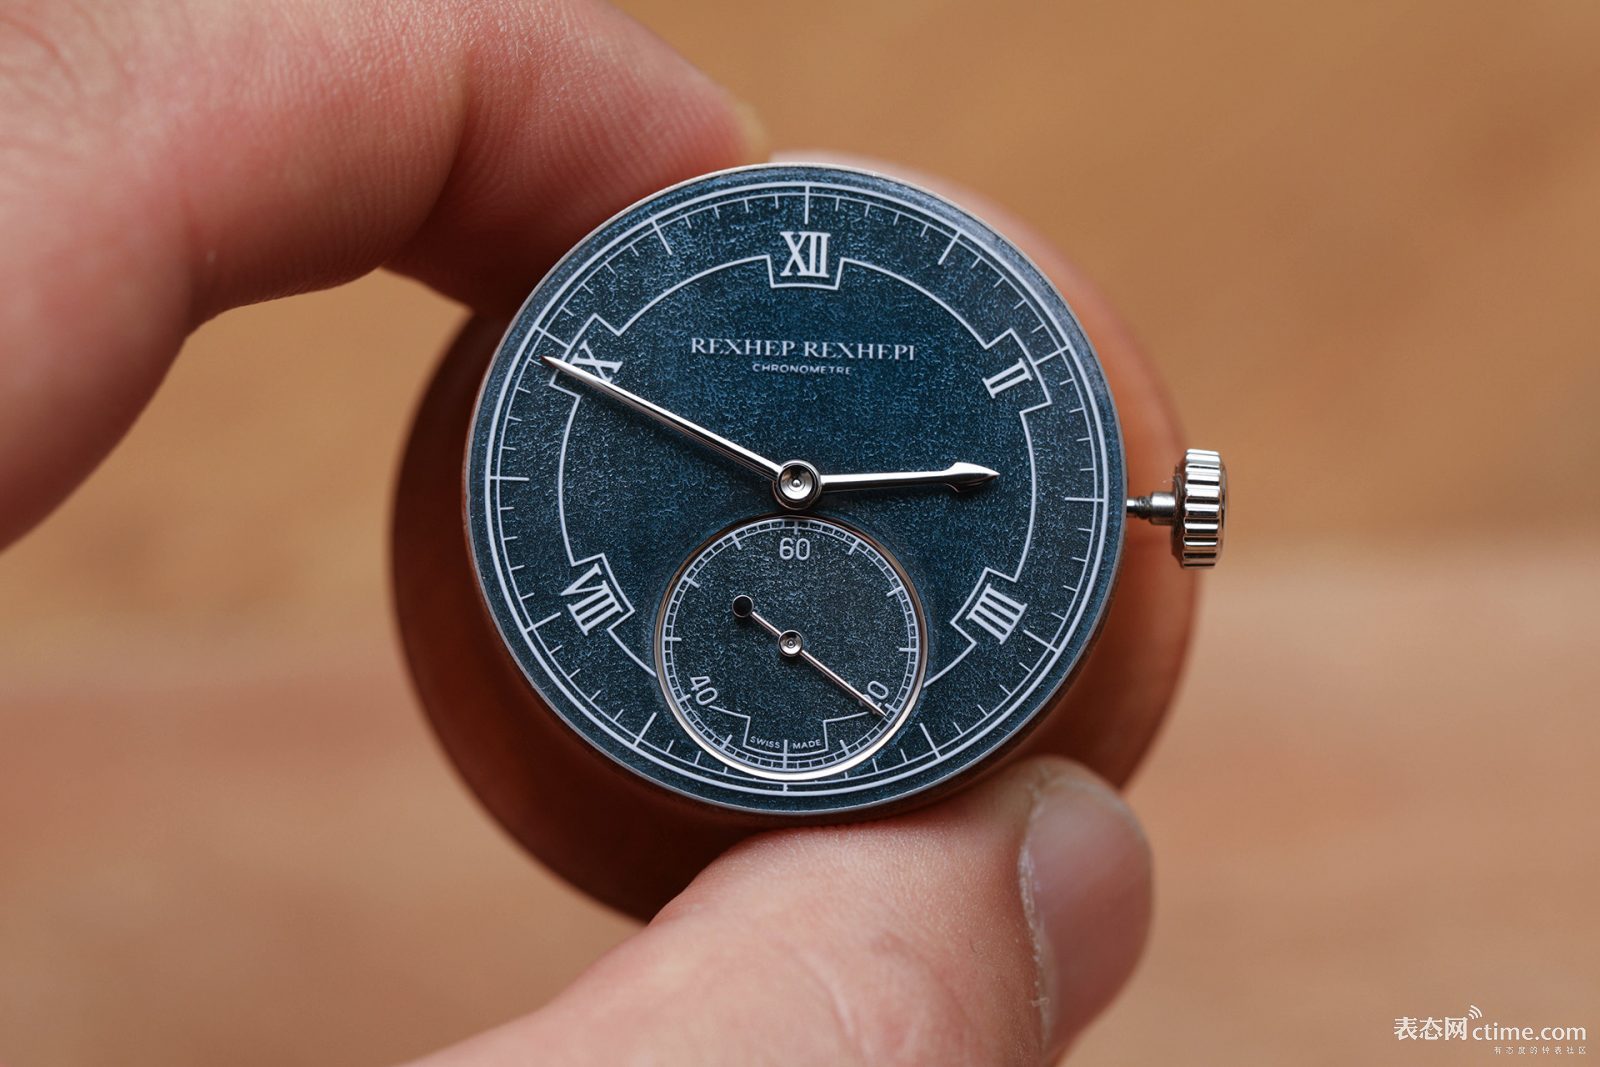 swisswatches-akrivia-rexhep-rexhepi-chronometre-contemporain-only-watch-making-off-007-1600x1067.jpg